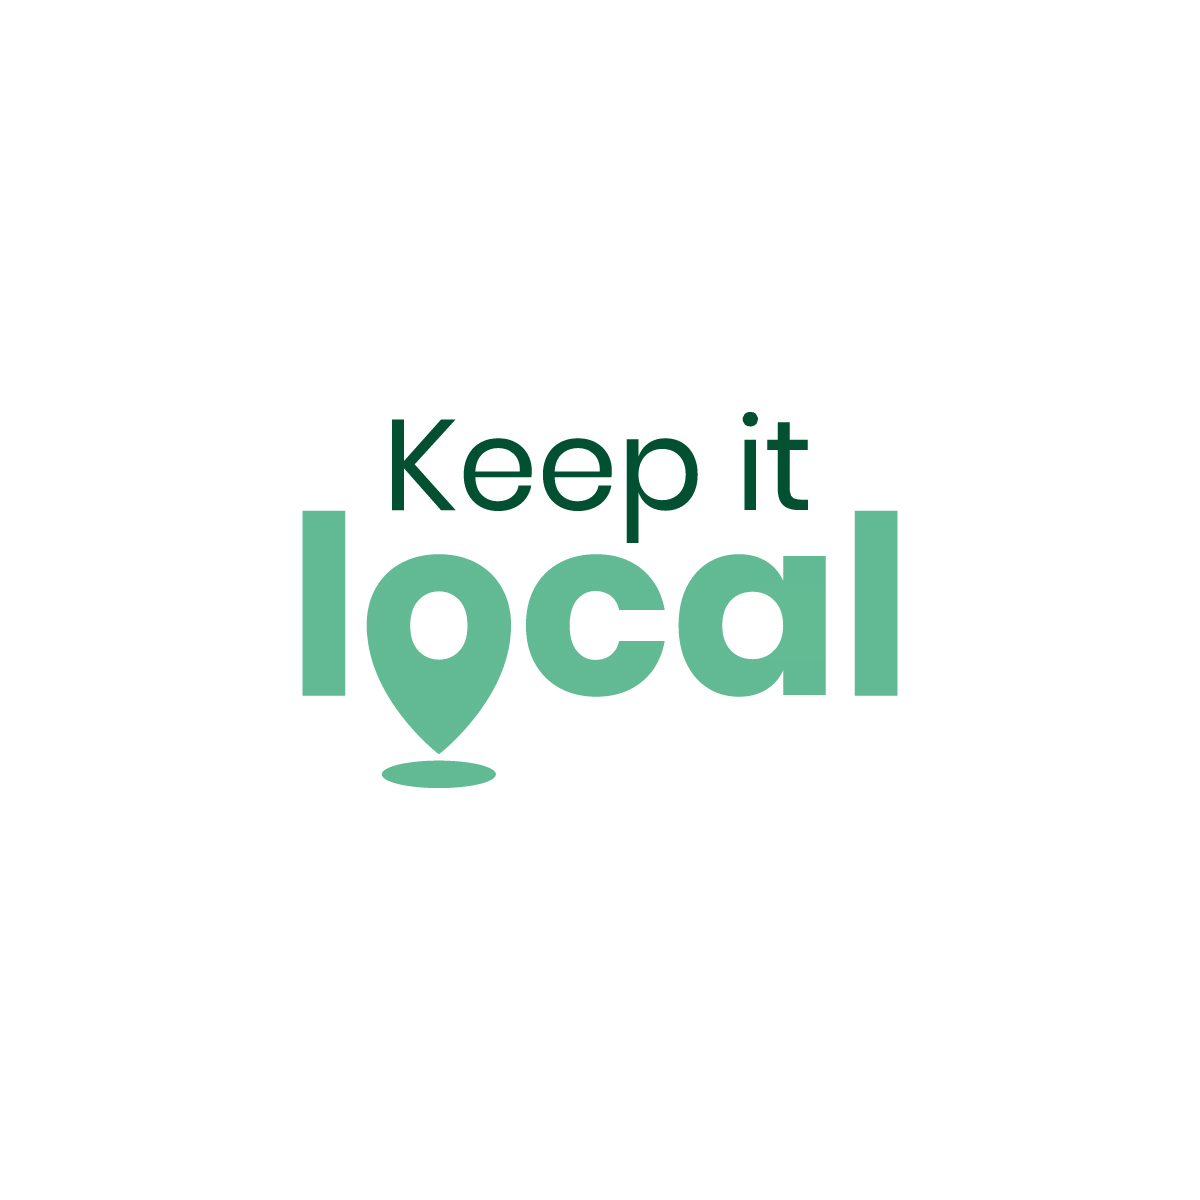 Keep it local